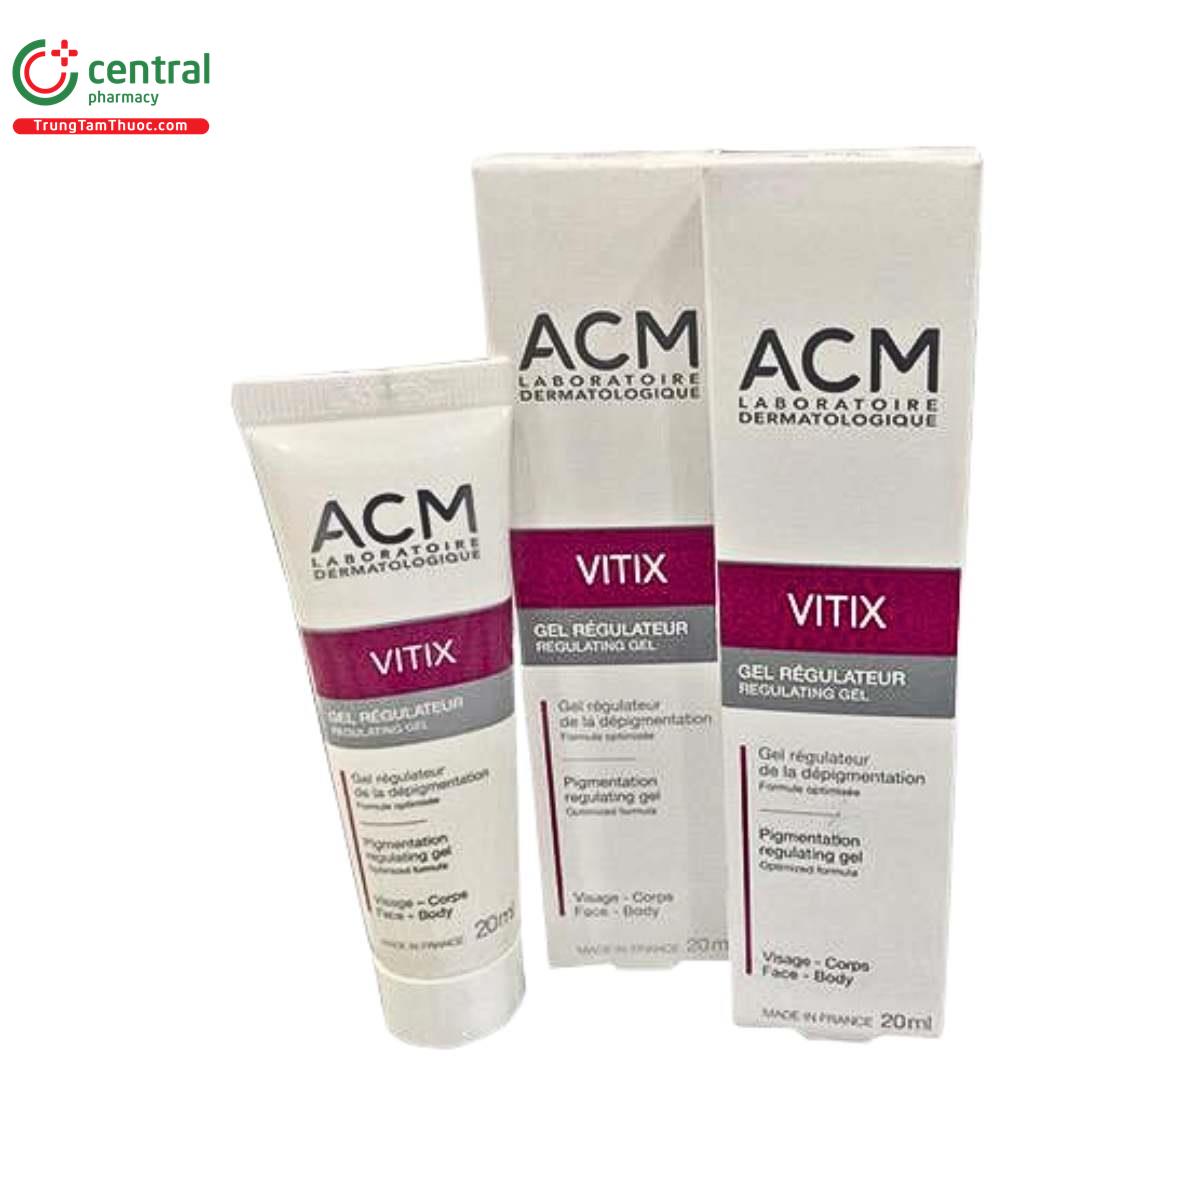 acm vitix gel regulateur 20 ml 2 K4246